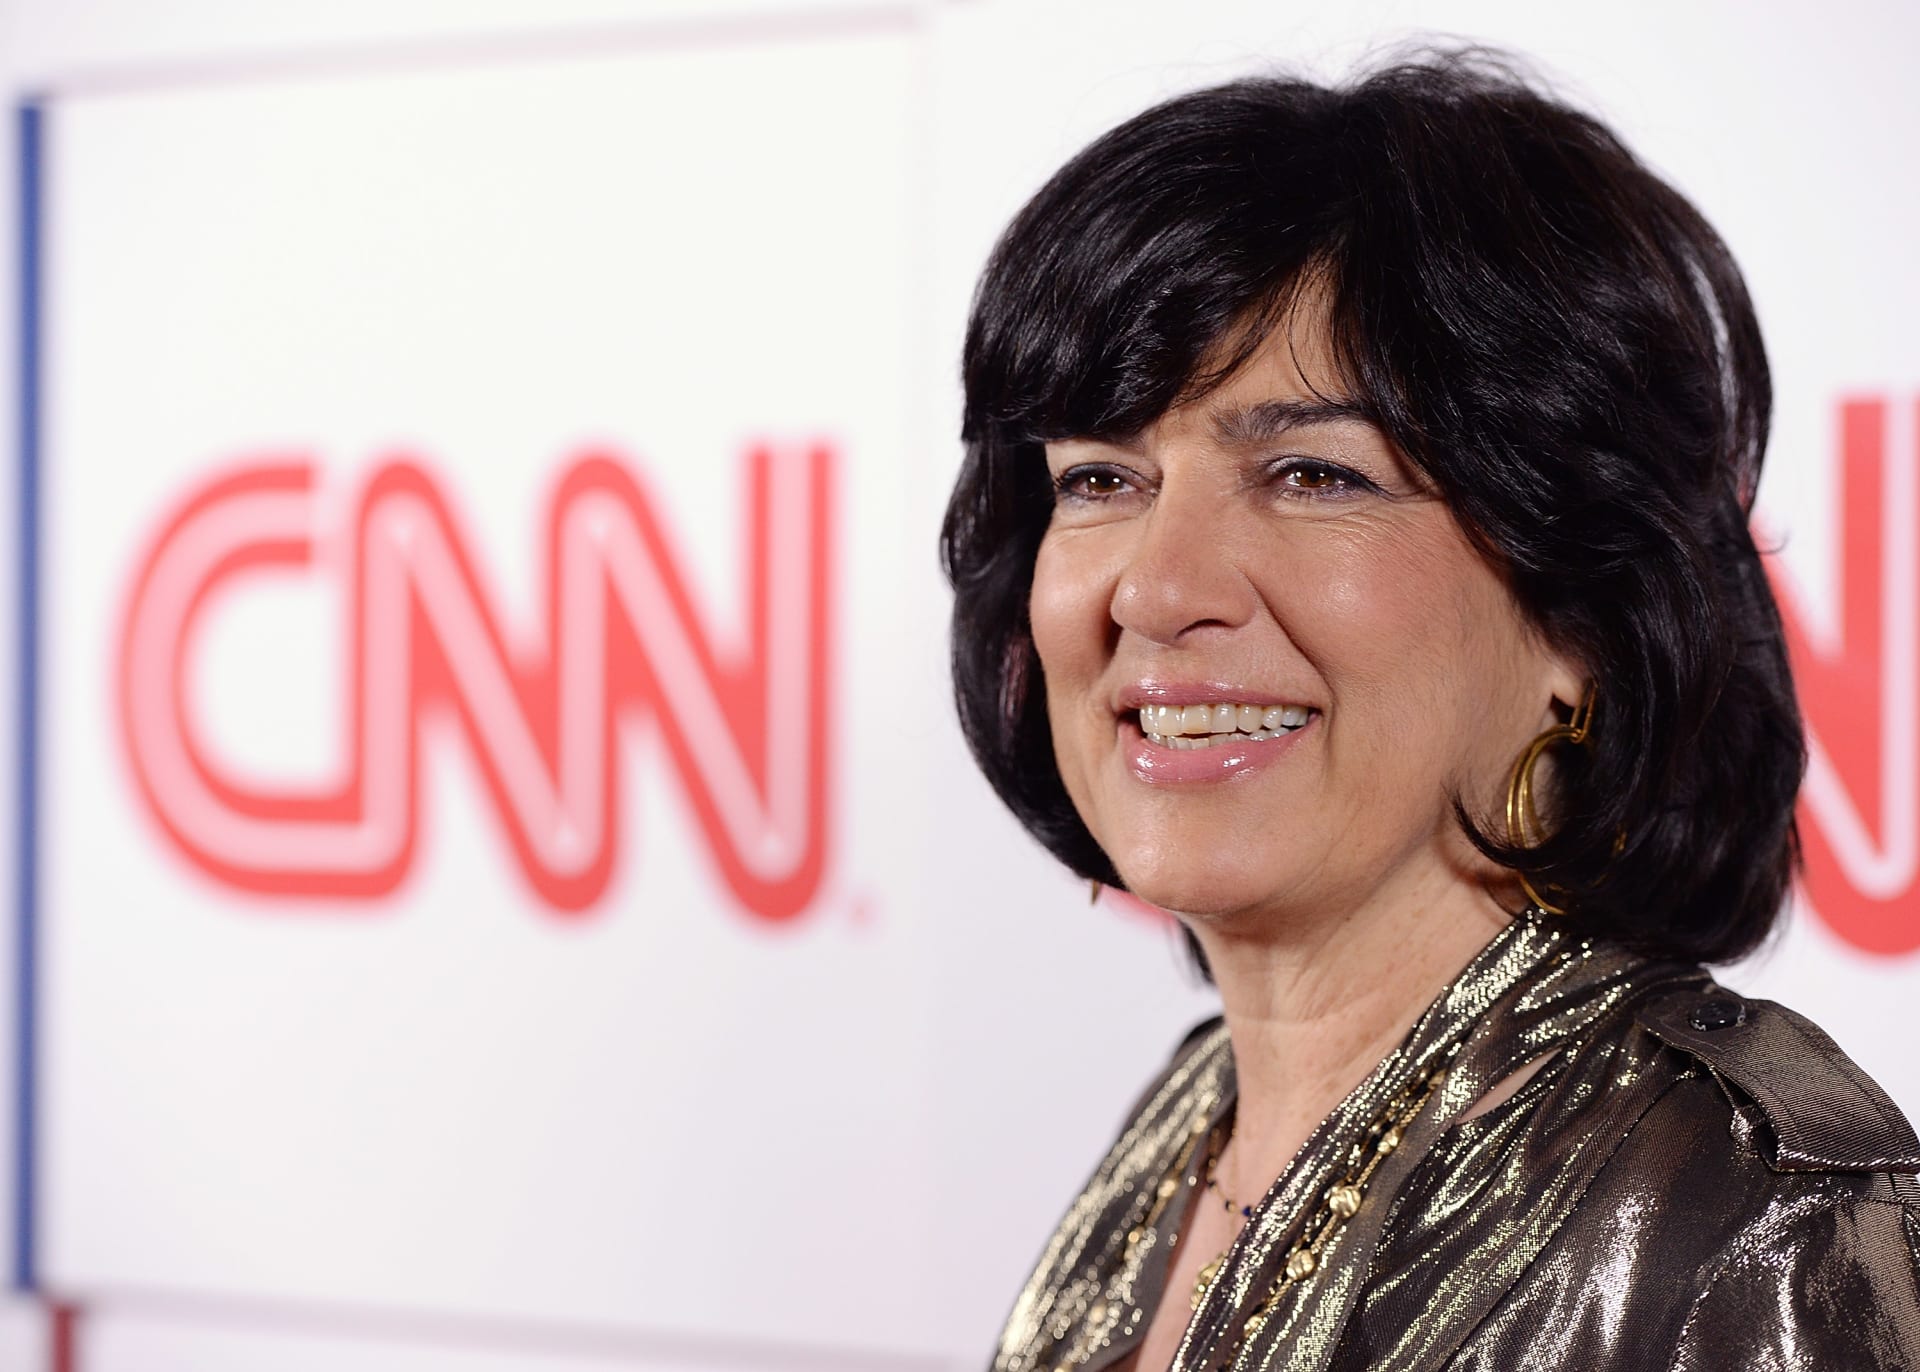 Novinářka Christiane Amanpourová na akci CNN v roce 2014.